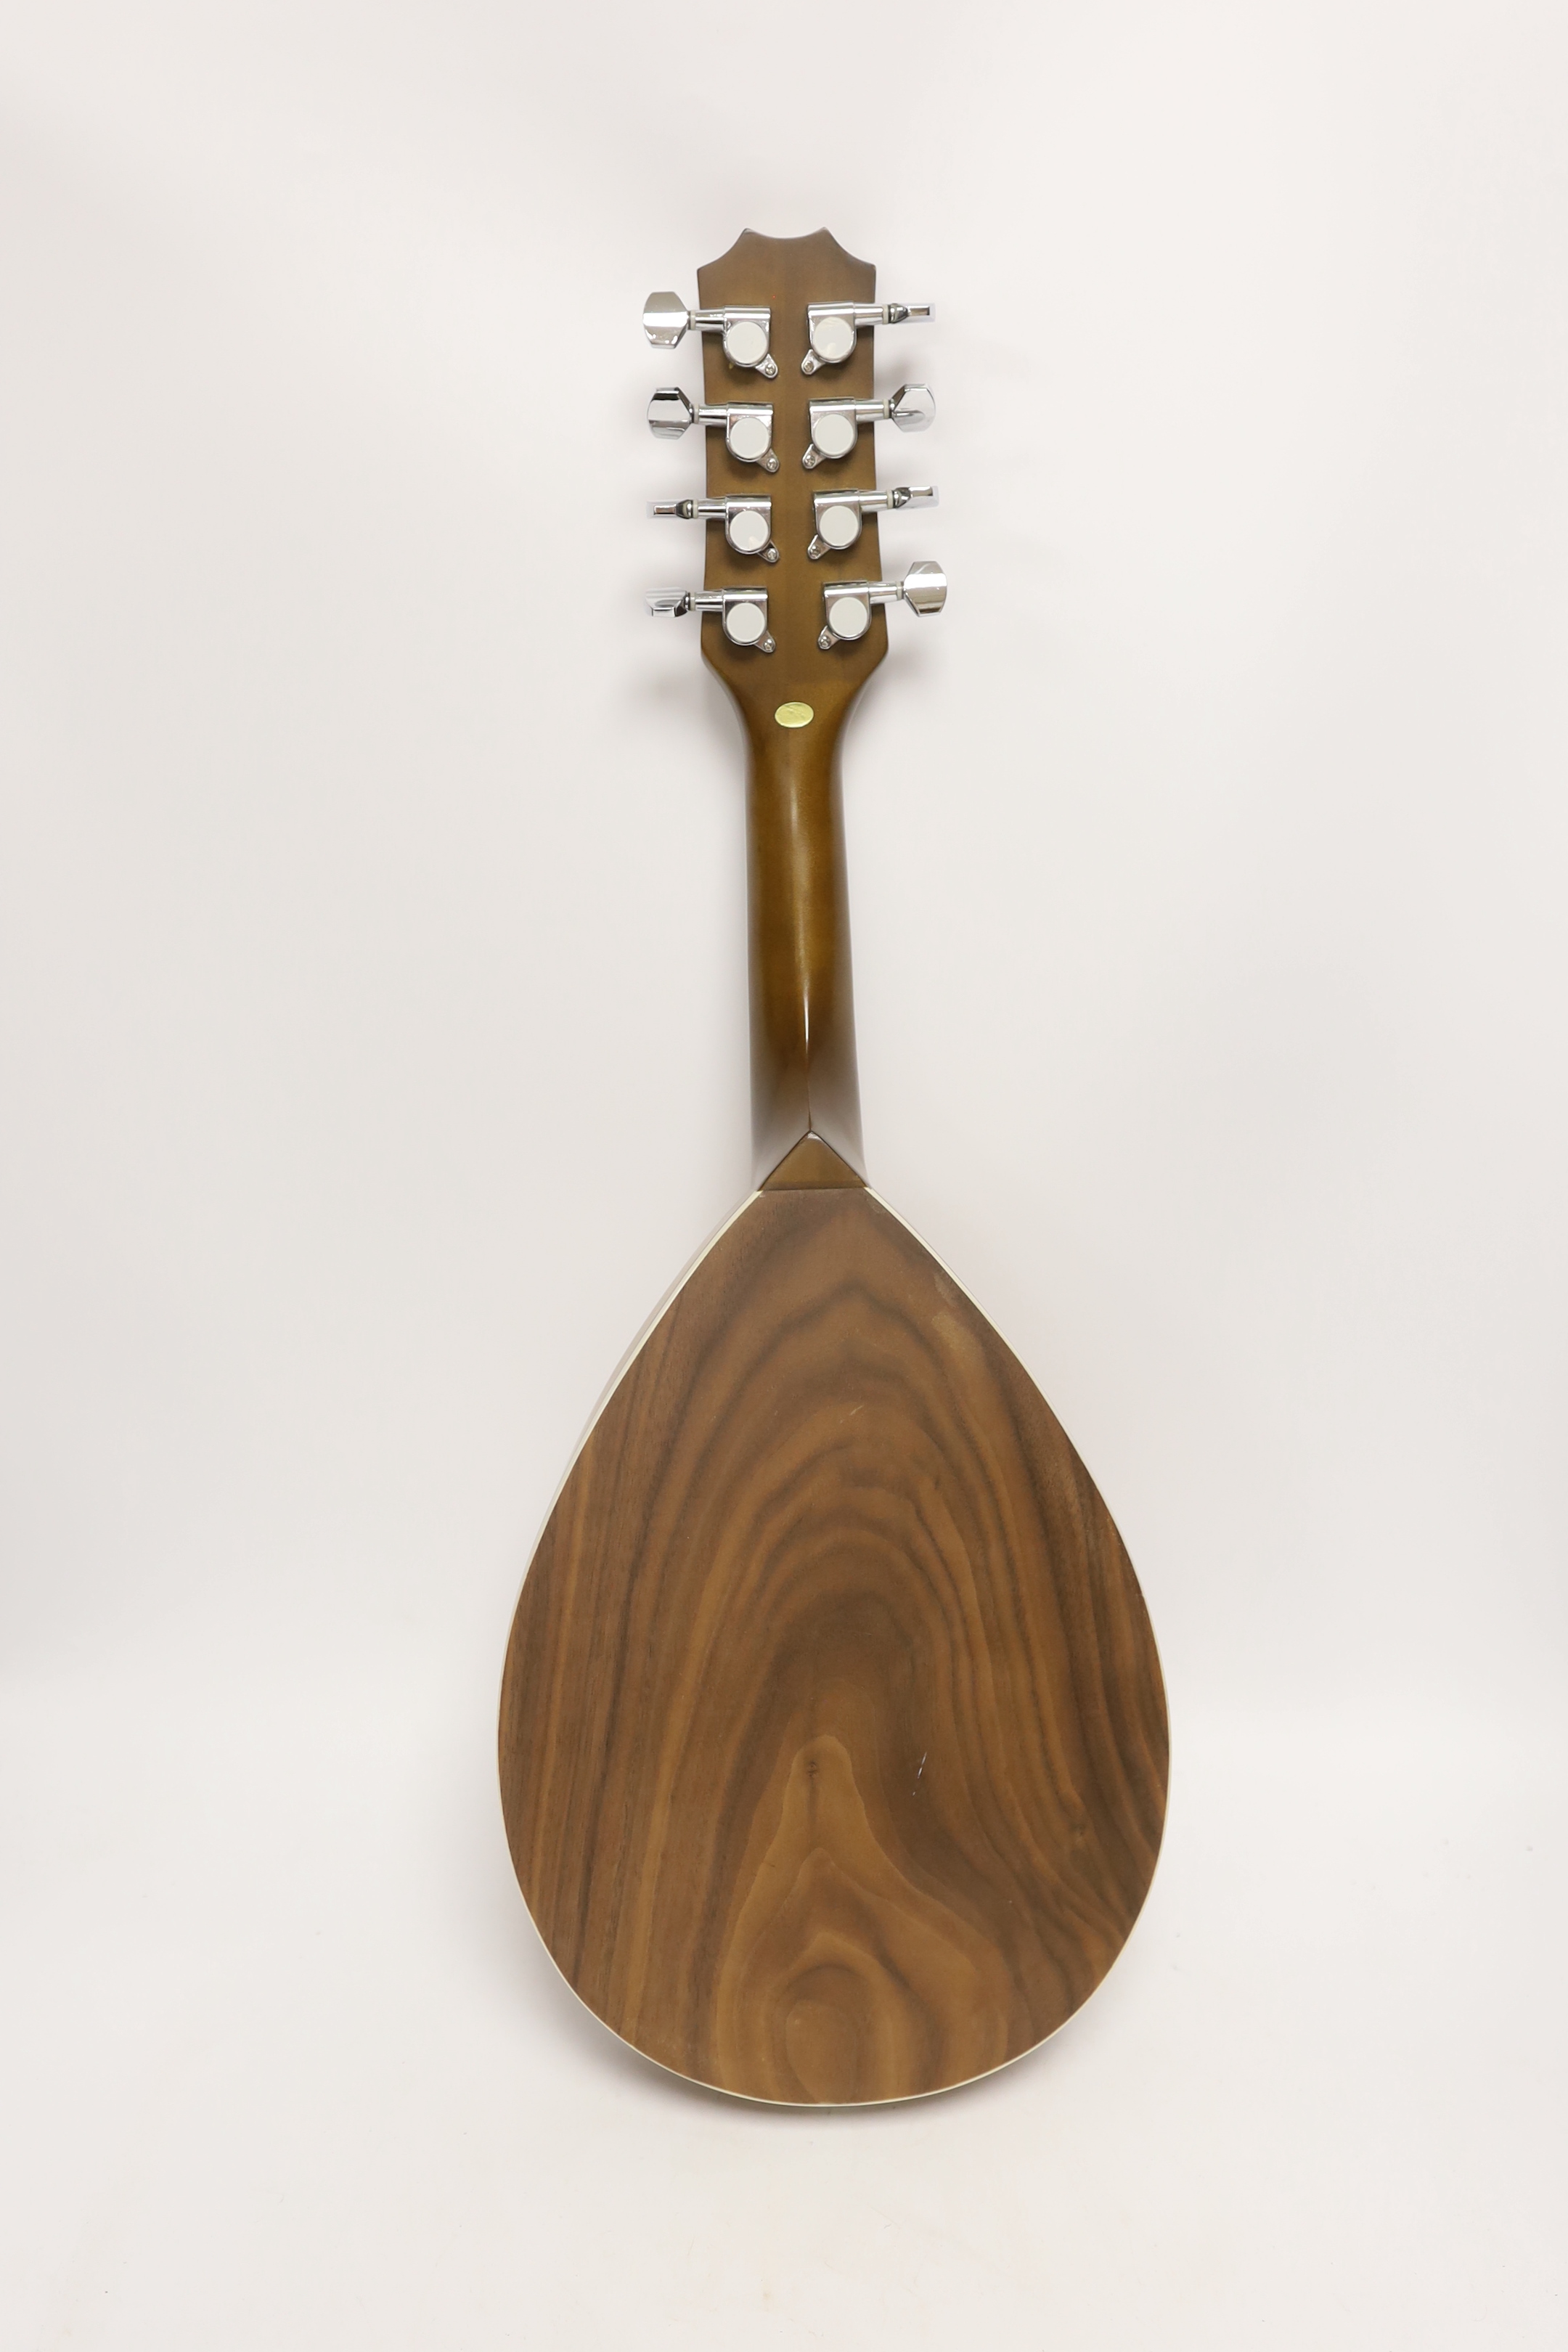 A Blue Moon tenor mandolin, overall length 63cm, in a soft canvas case